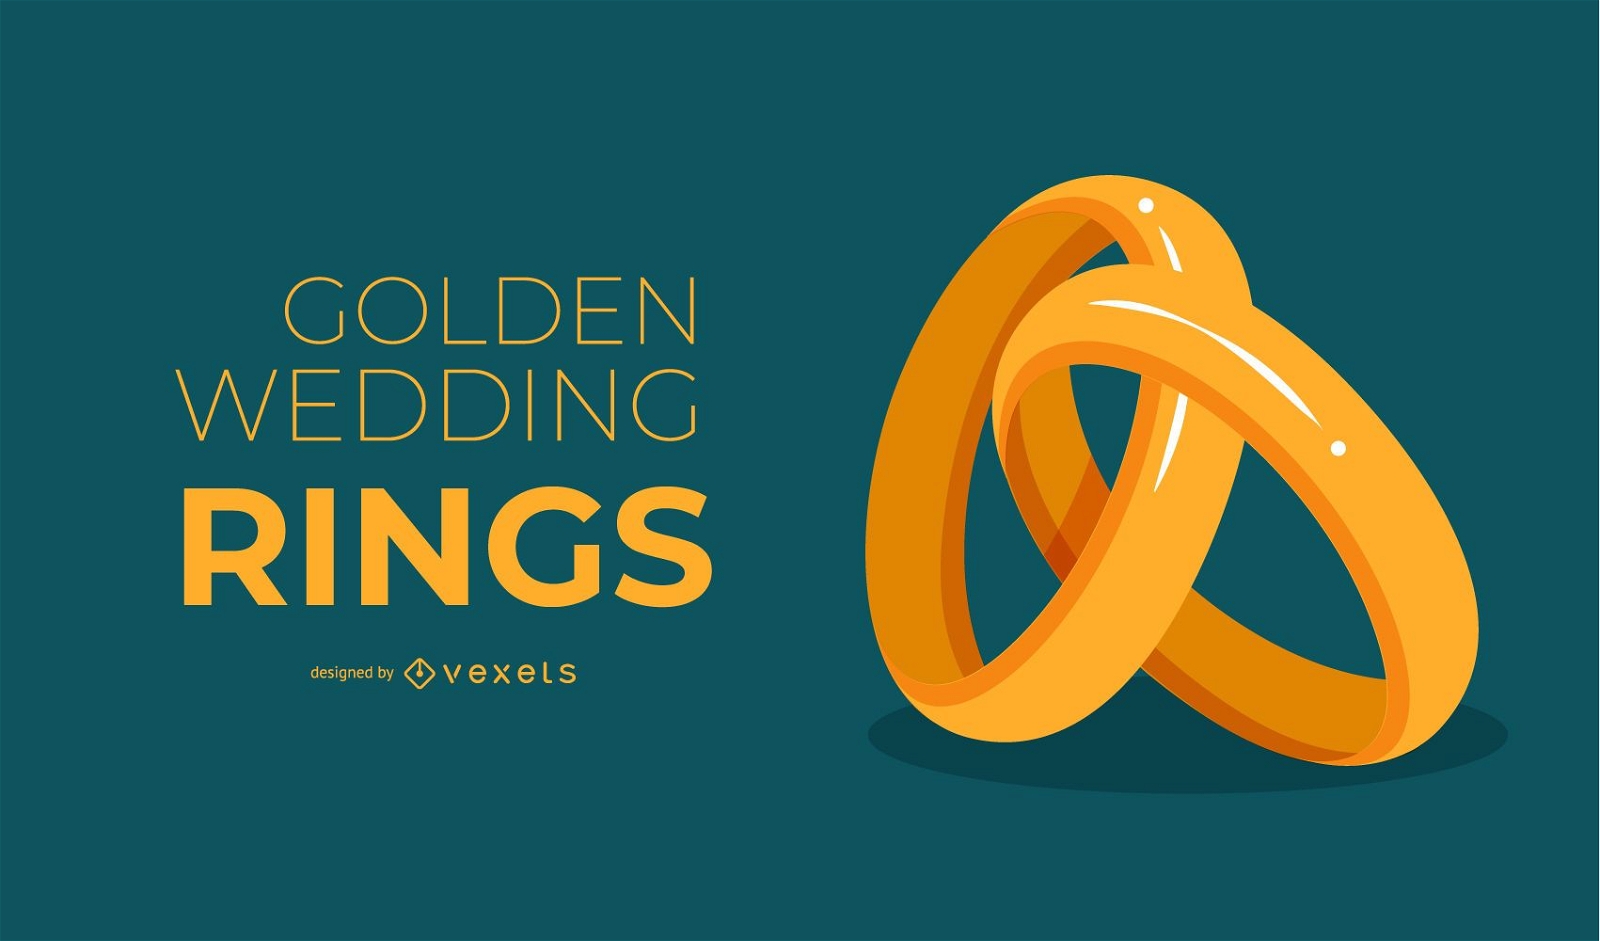 Golden Wedding Rings Background Design